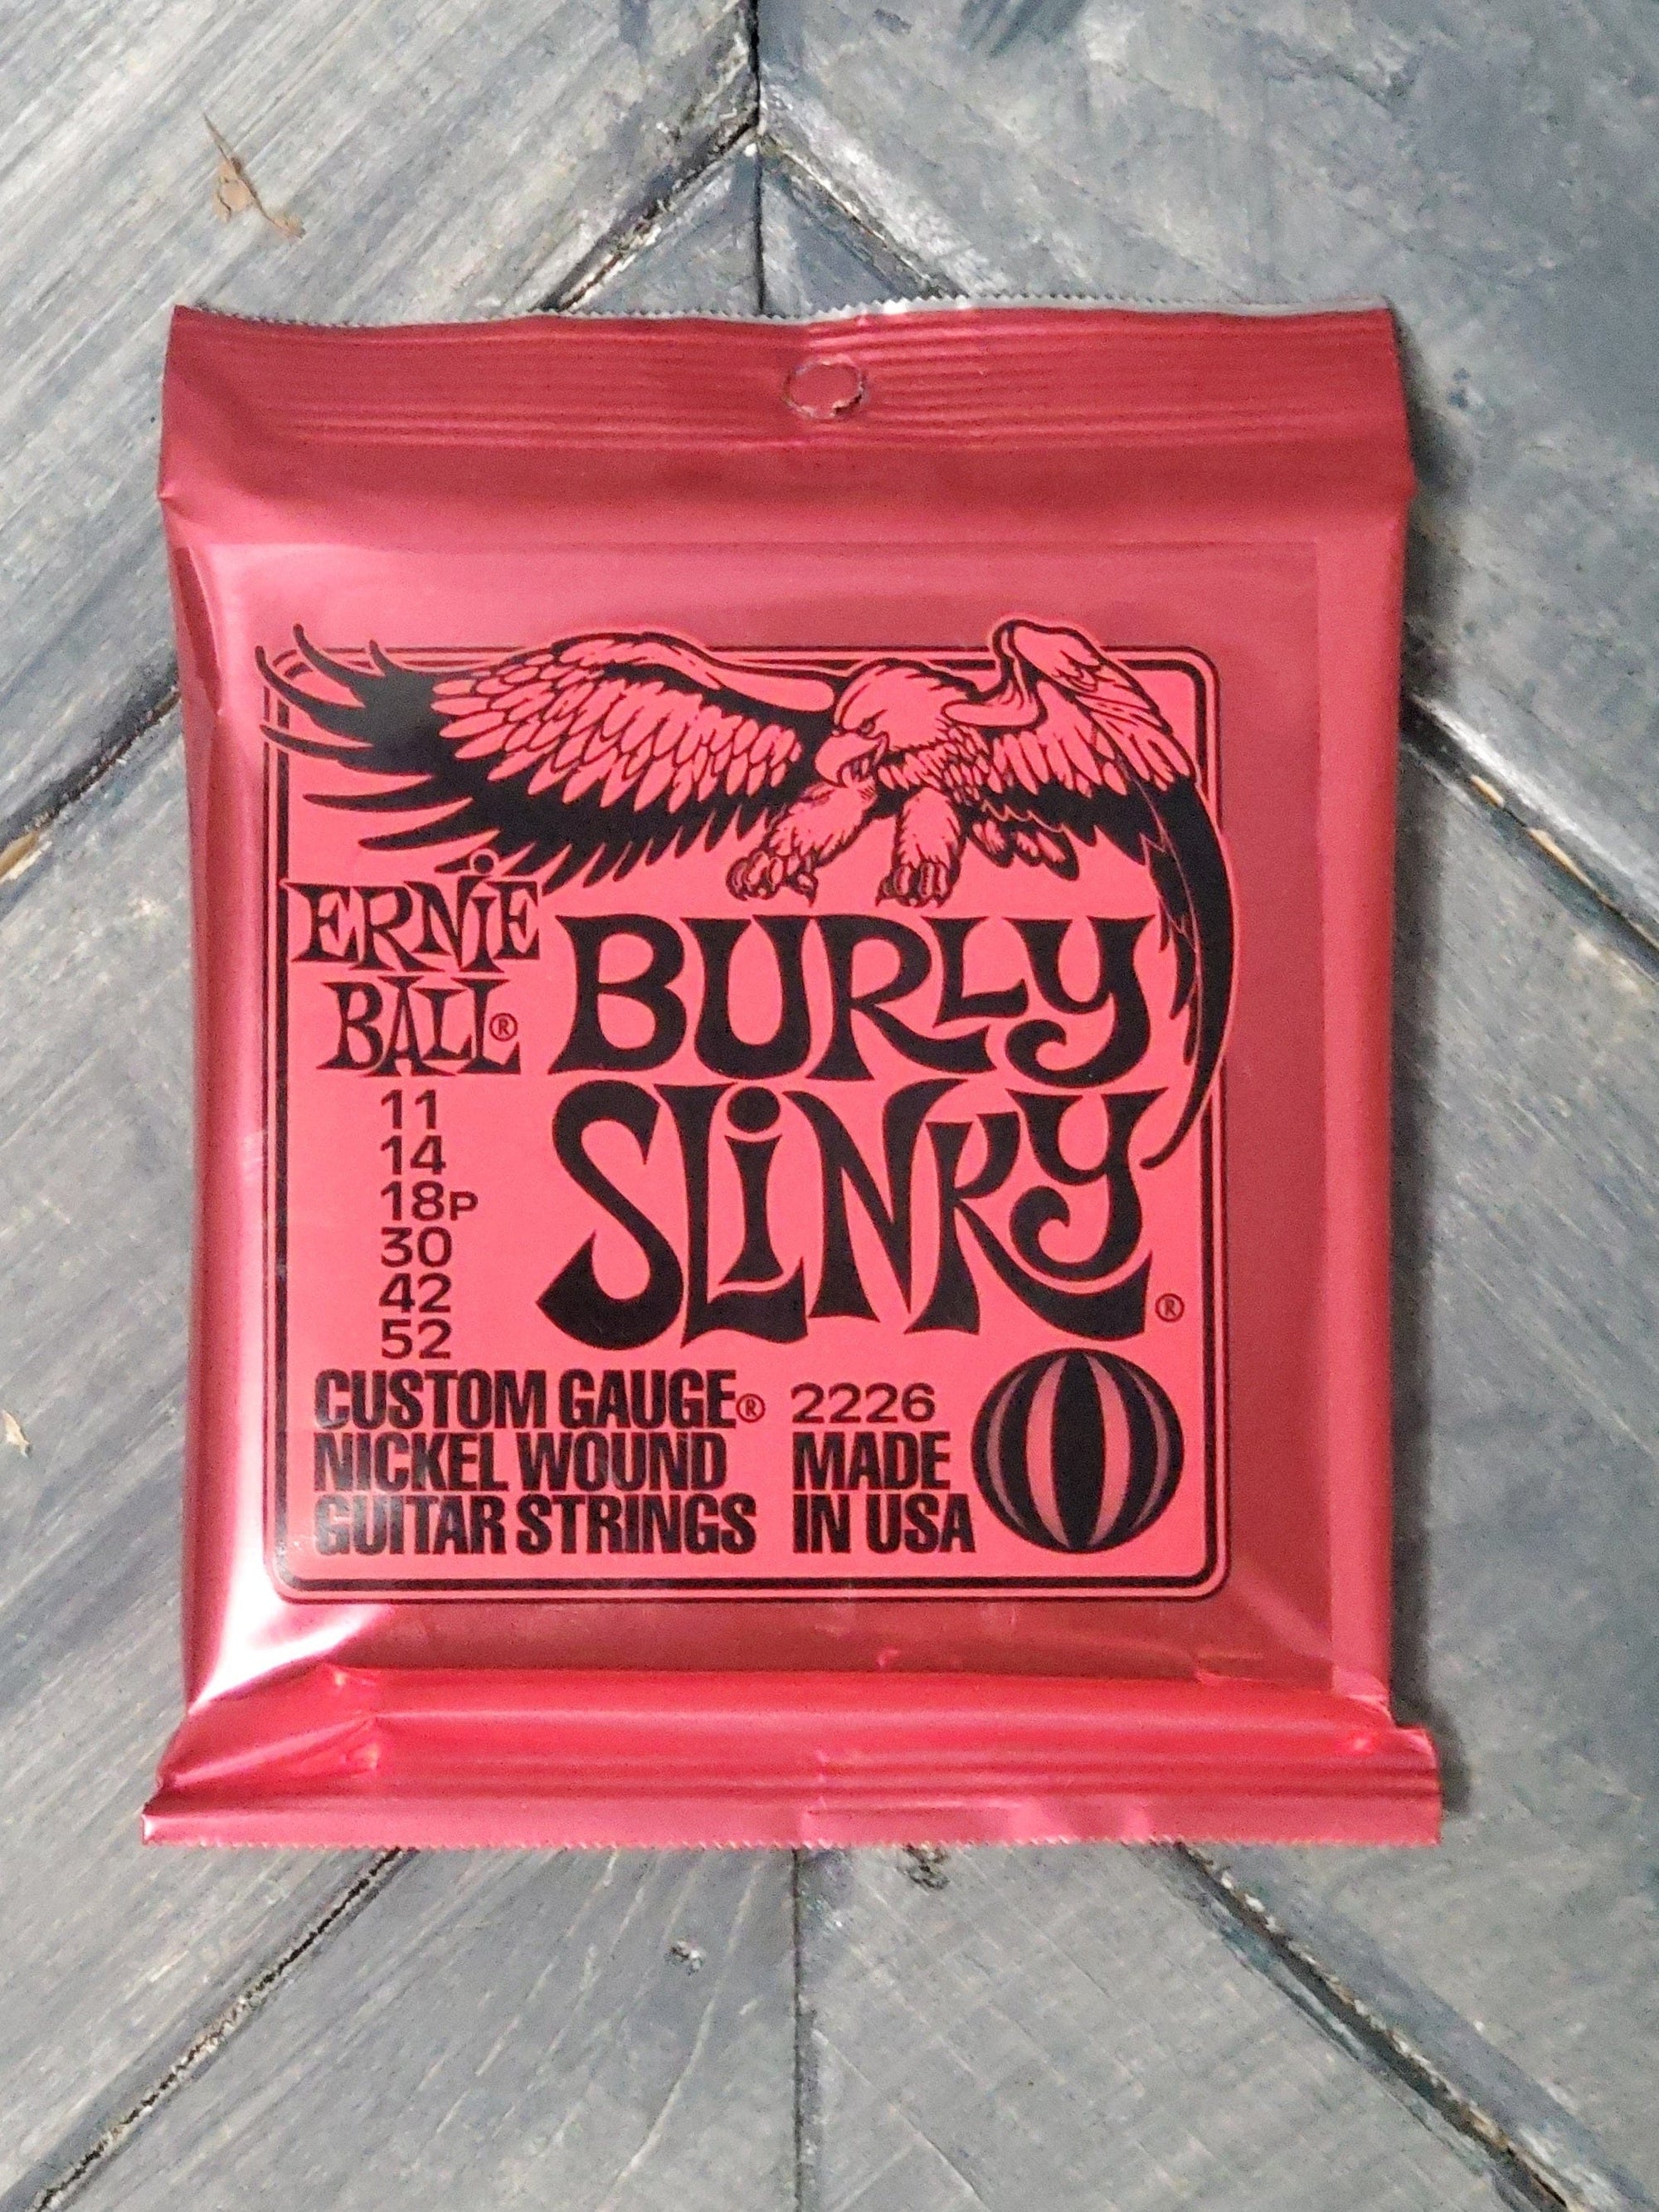 ernie ball Strings Burly Slinky Nickel Wound Electric Guitar Strings 11-52 Guage